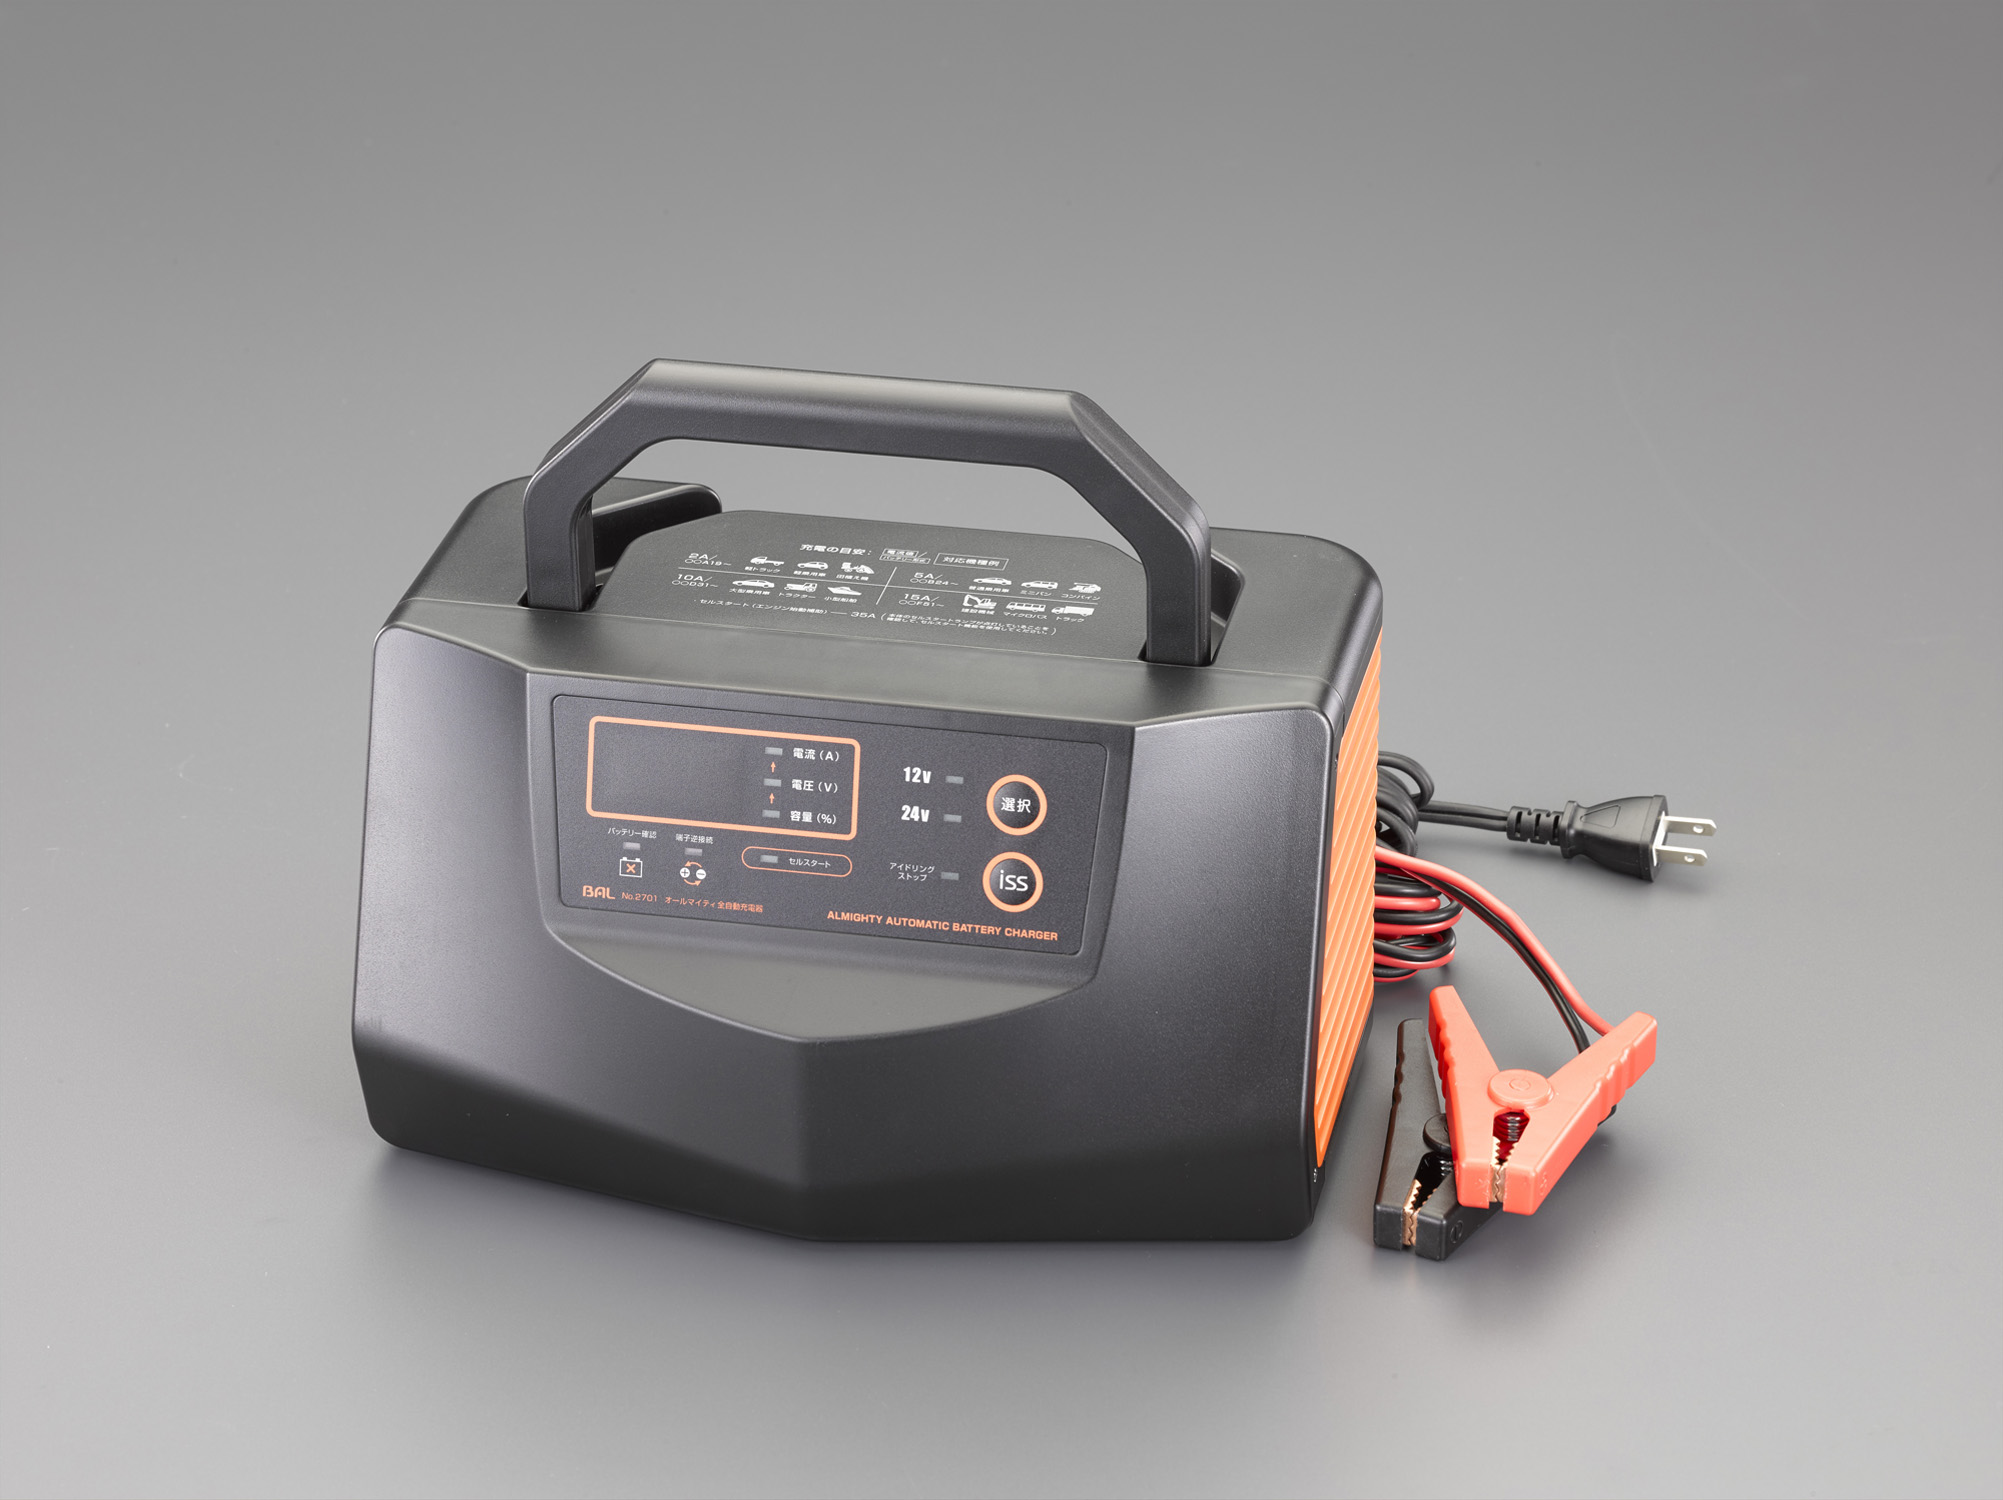 Ea815ya 26 Ac100v 自動充電器 ｱｲﾄﾞﾘﾝｸﾞｽﾄｯﾌﾟ車対応 のページ Sakkey エスコの商品を検索